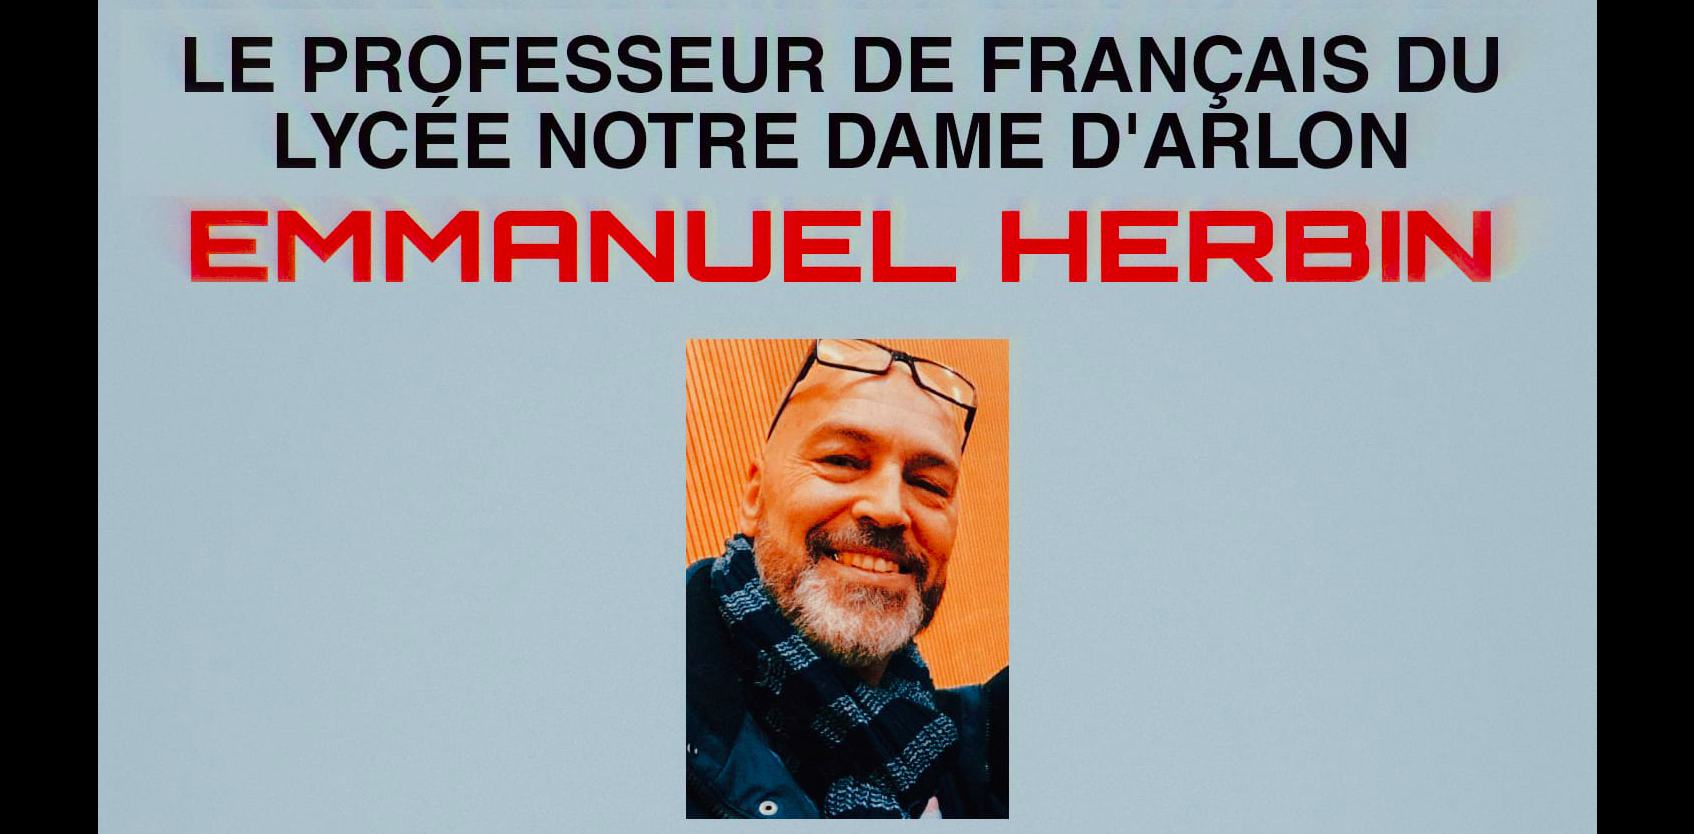 Emmanuel Herbin - Licenciement abusif !?